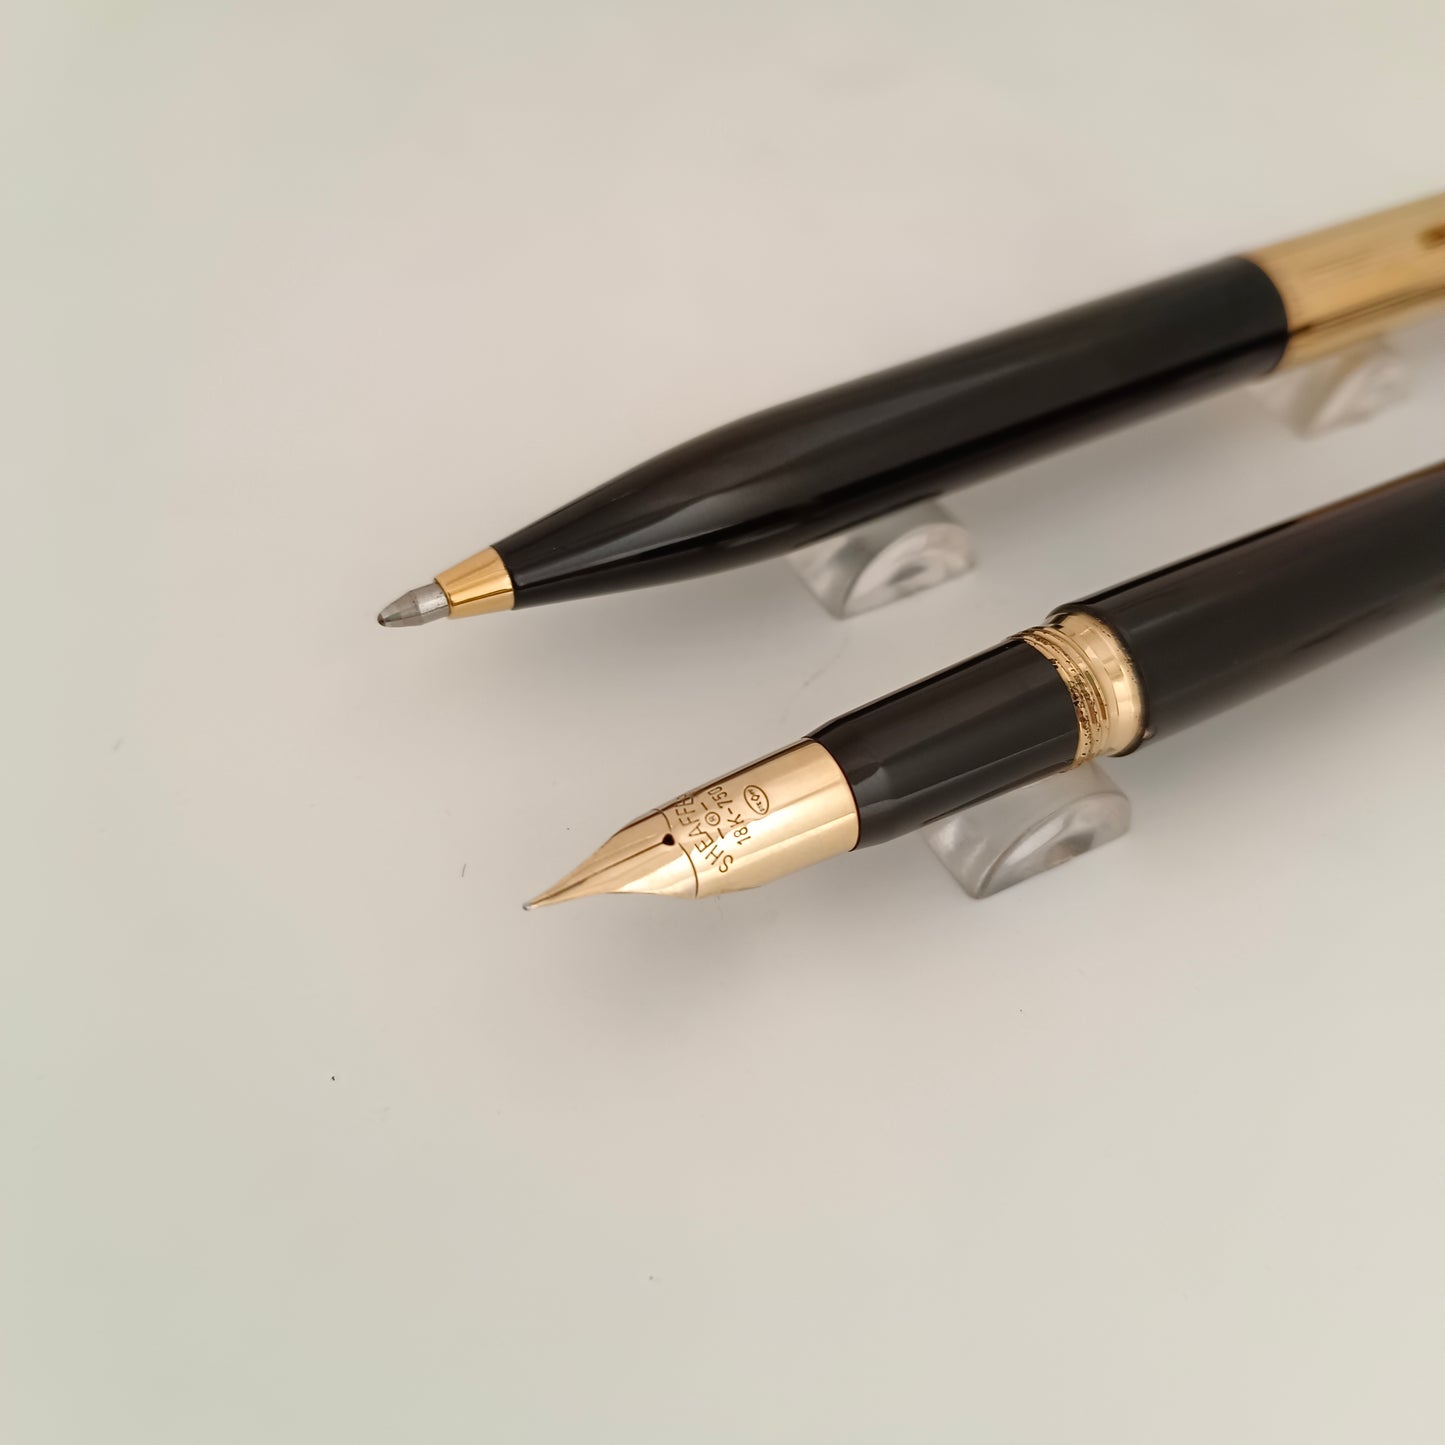 Sheaffer Crest 593 Black with gold Plated cap pen set